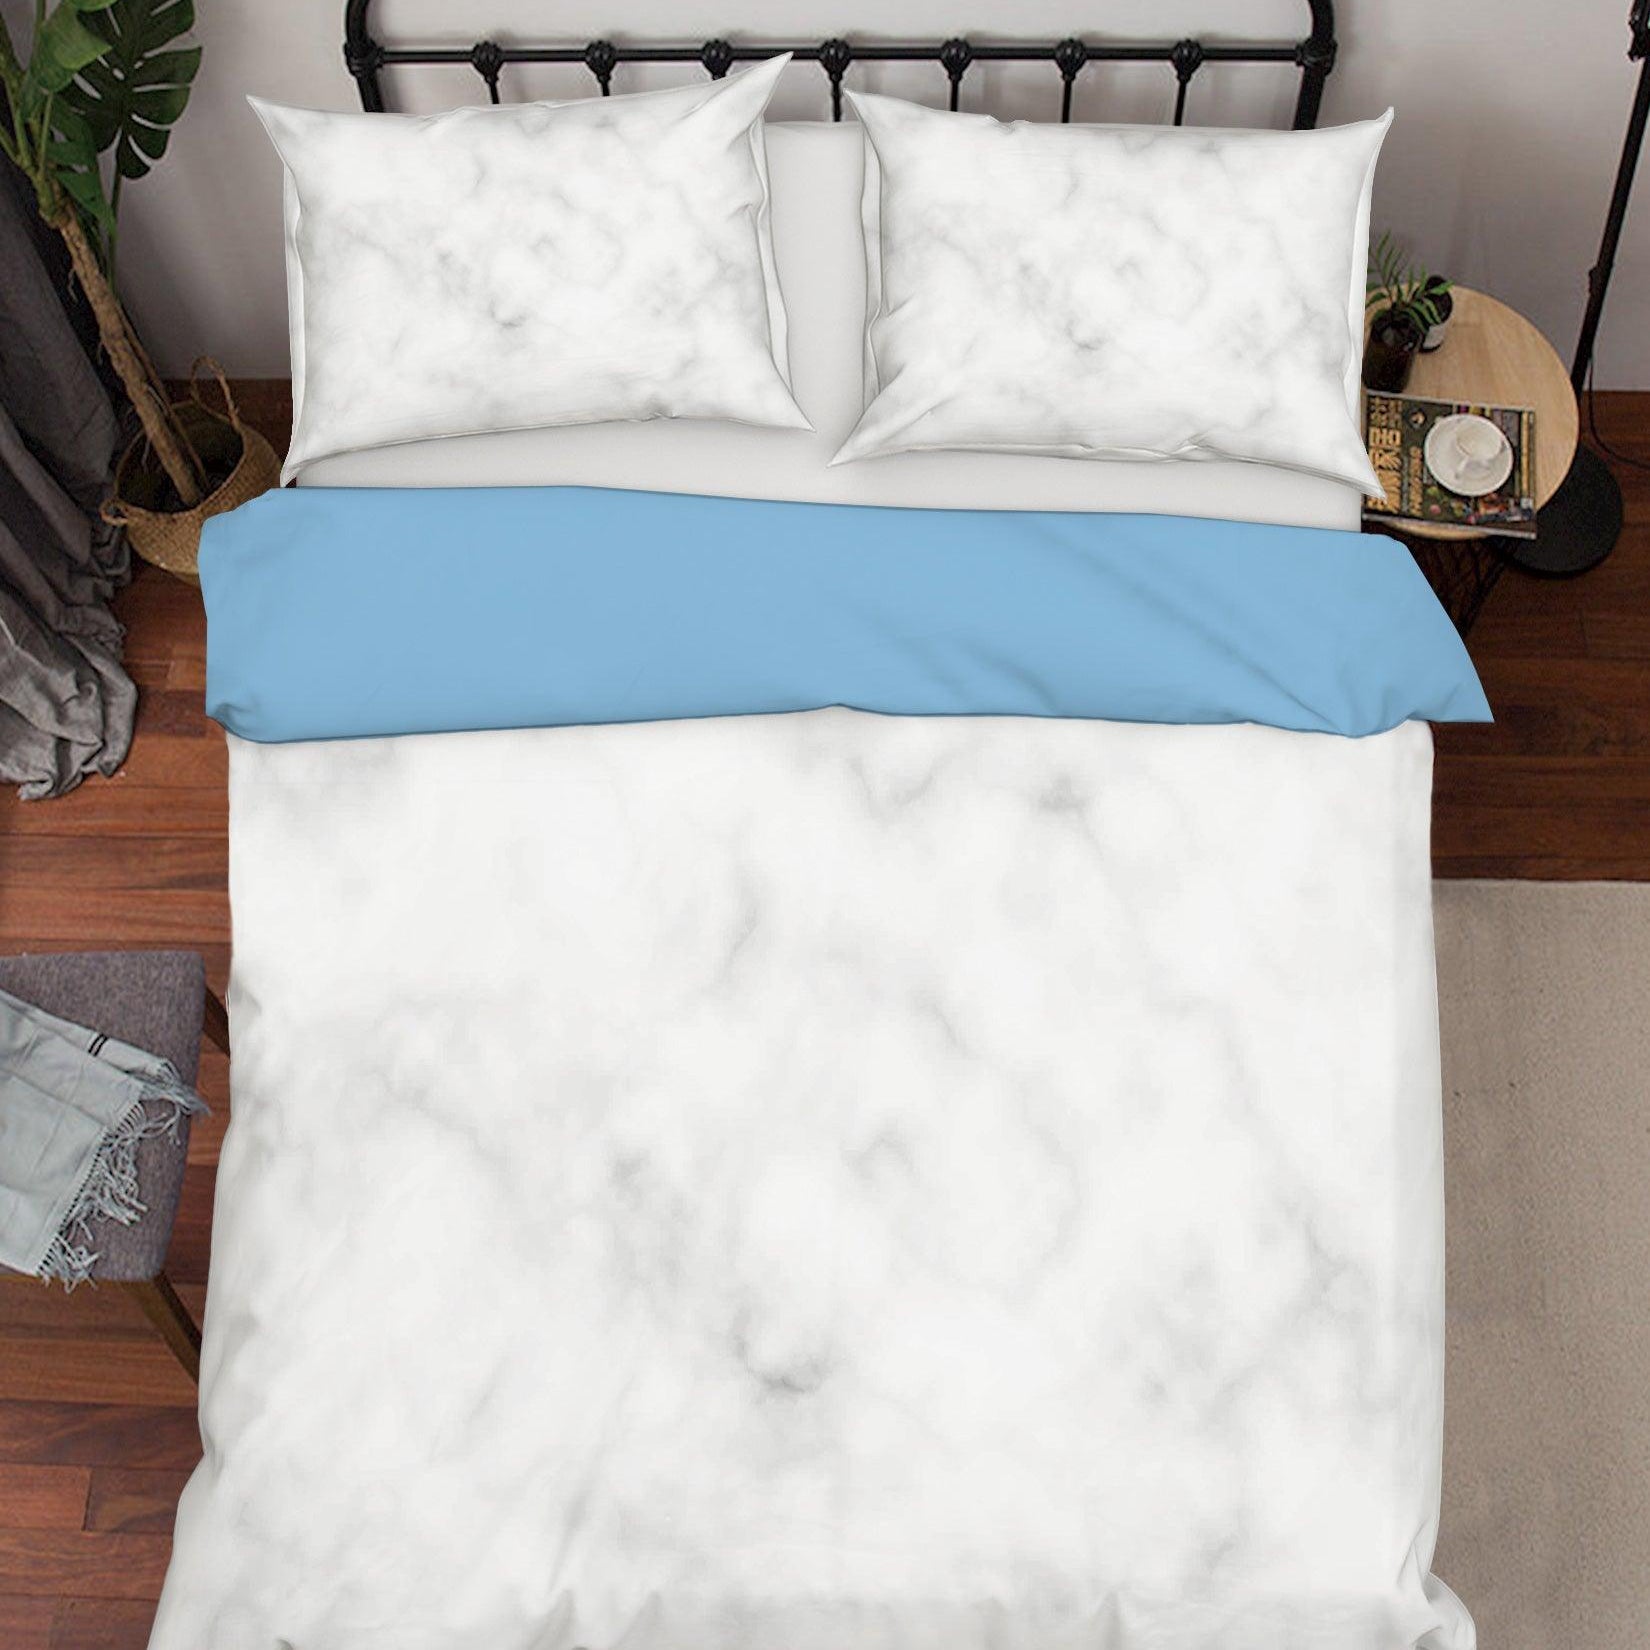 3D White Background Quilt Cover Set Bedding Set Pillowcases 16- Jess Art Decoration